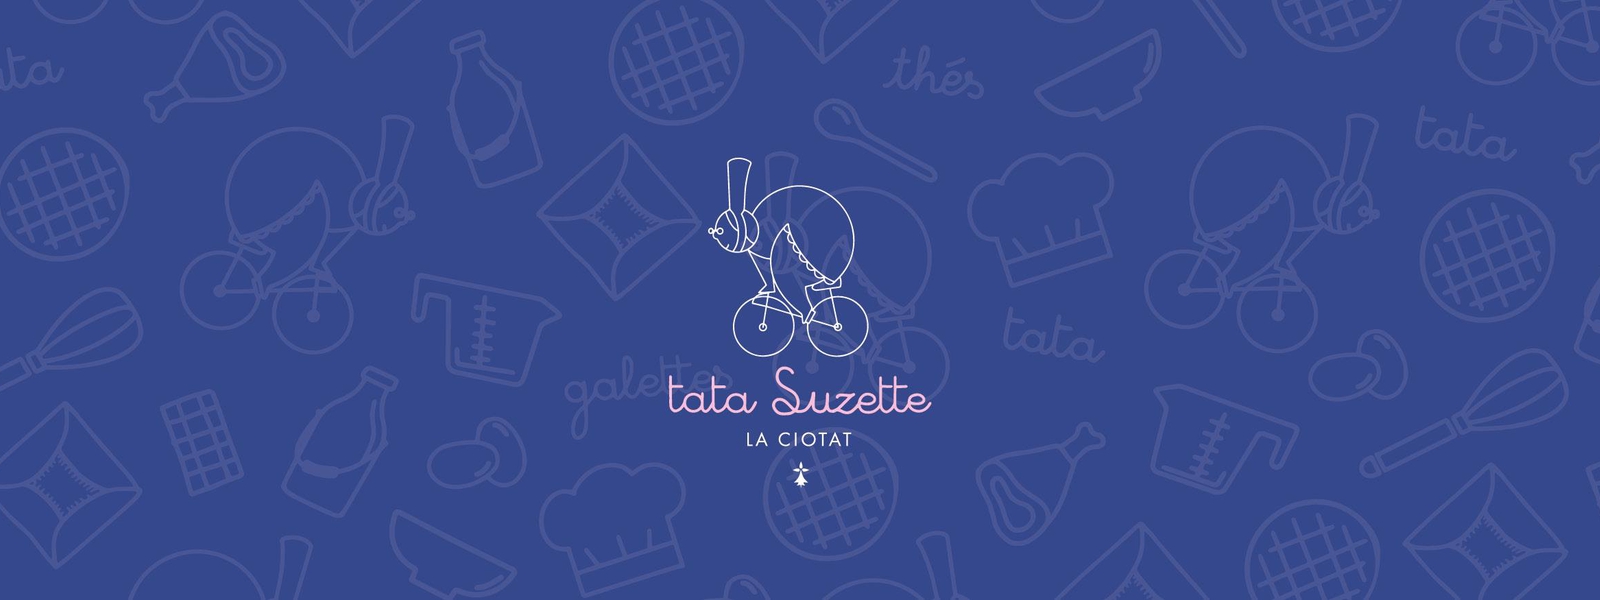 Tata Suzette image header